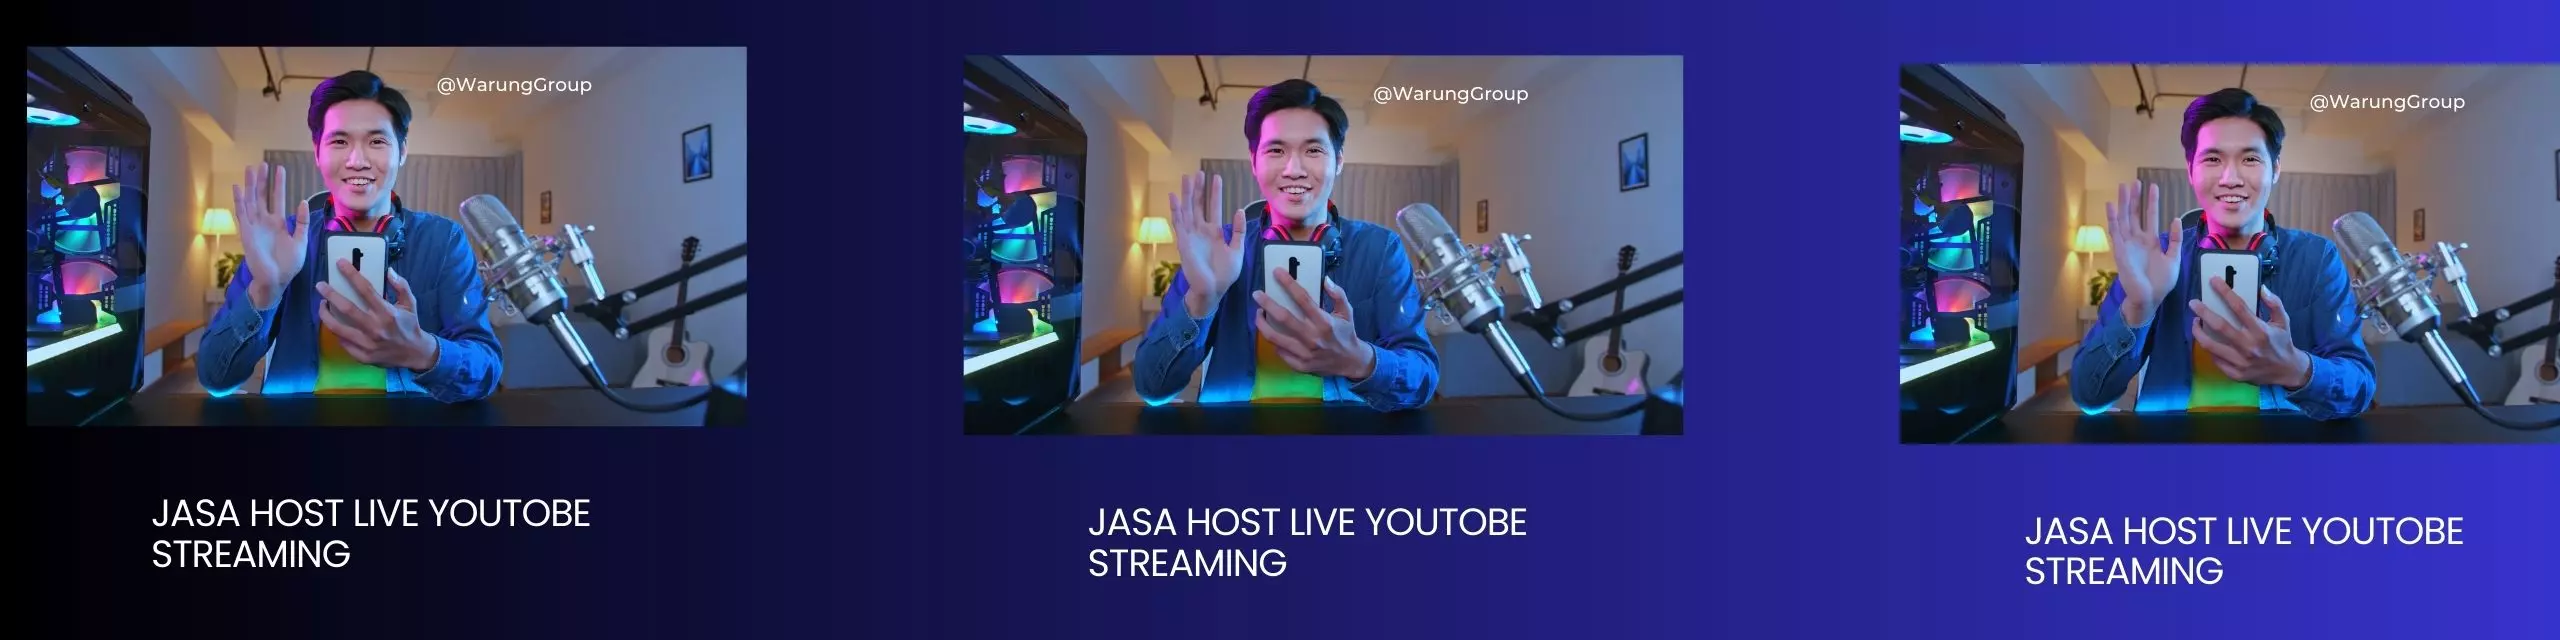 Jasa Host Live Youtube Streaming